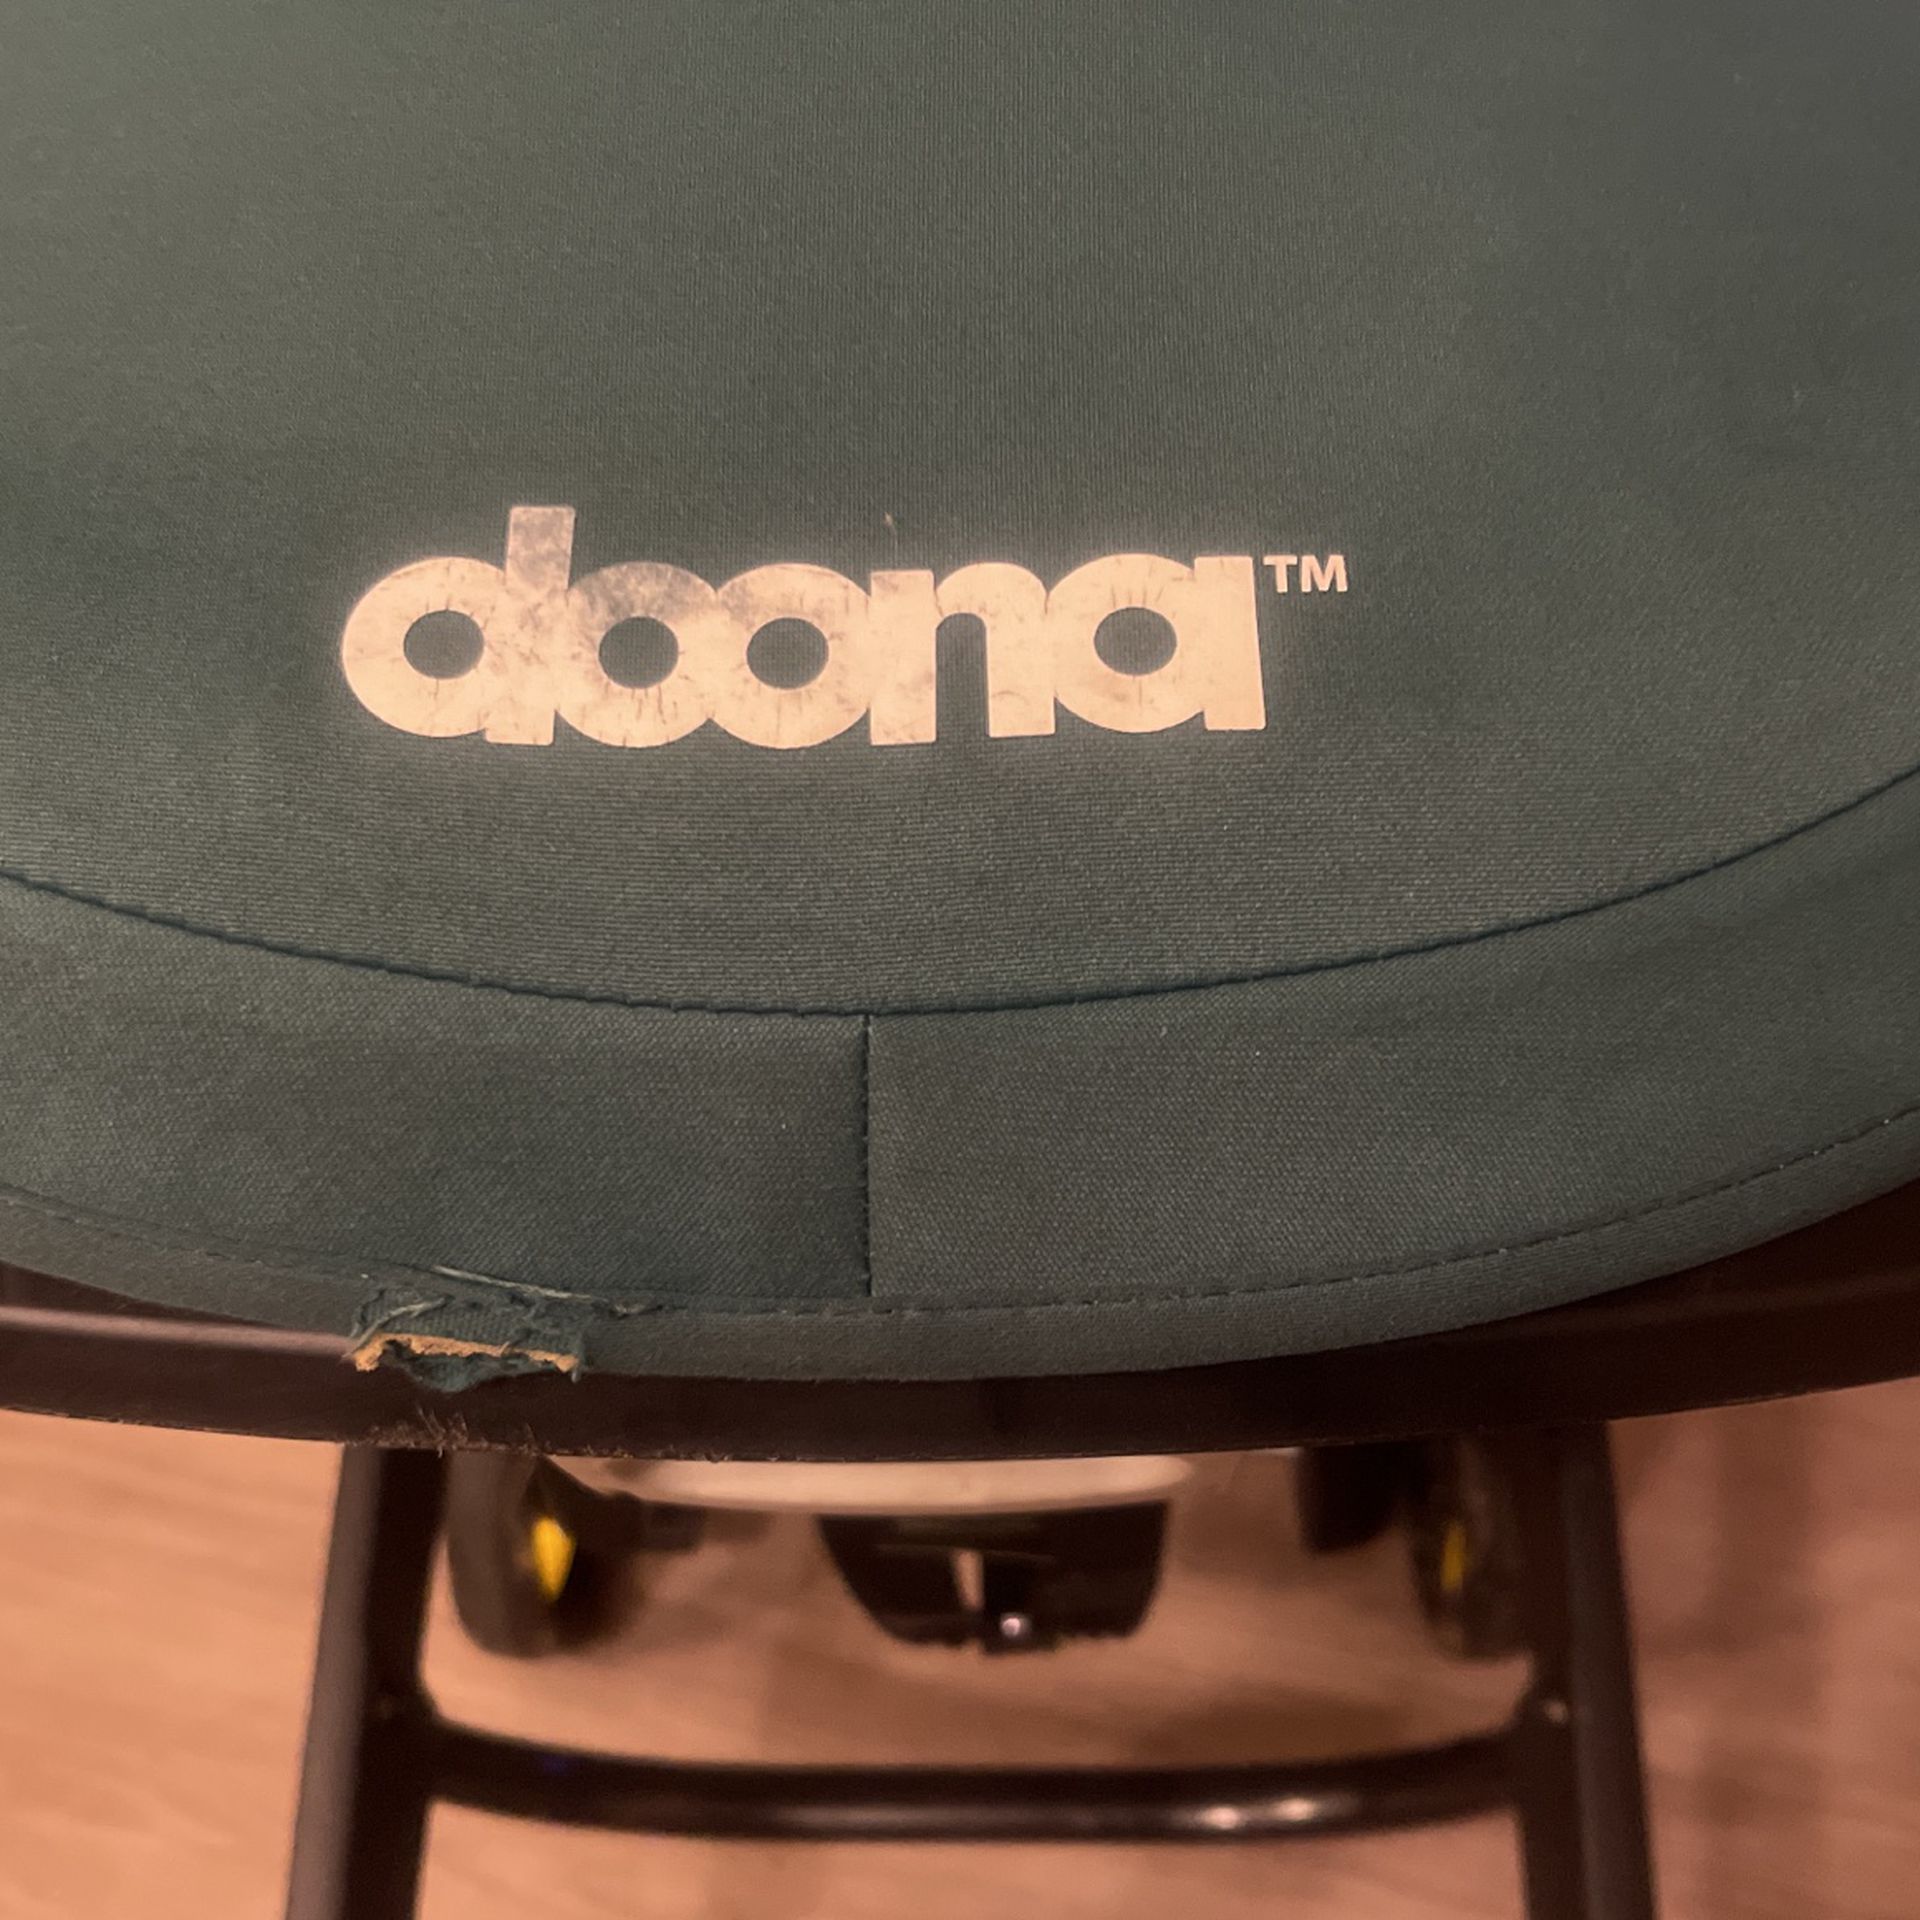 Doona Car seat 